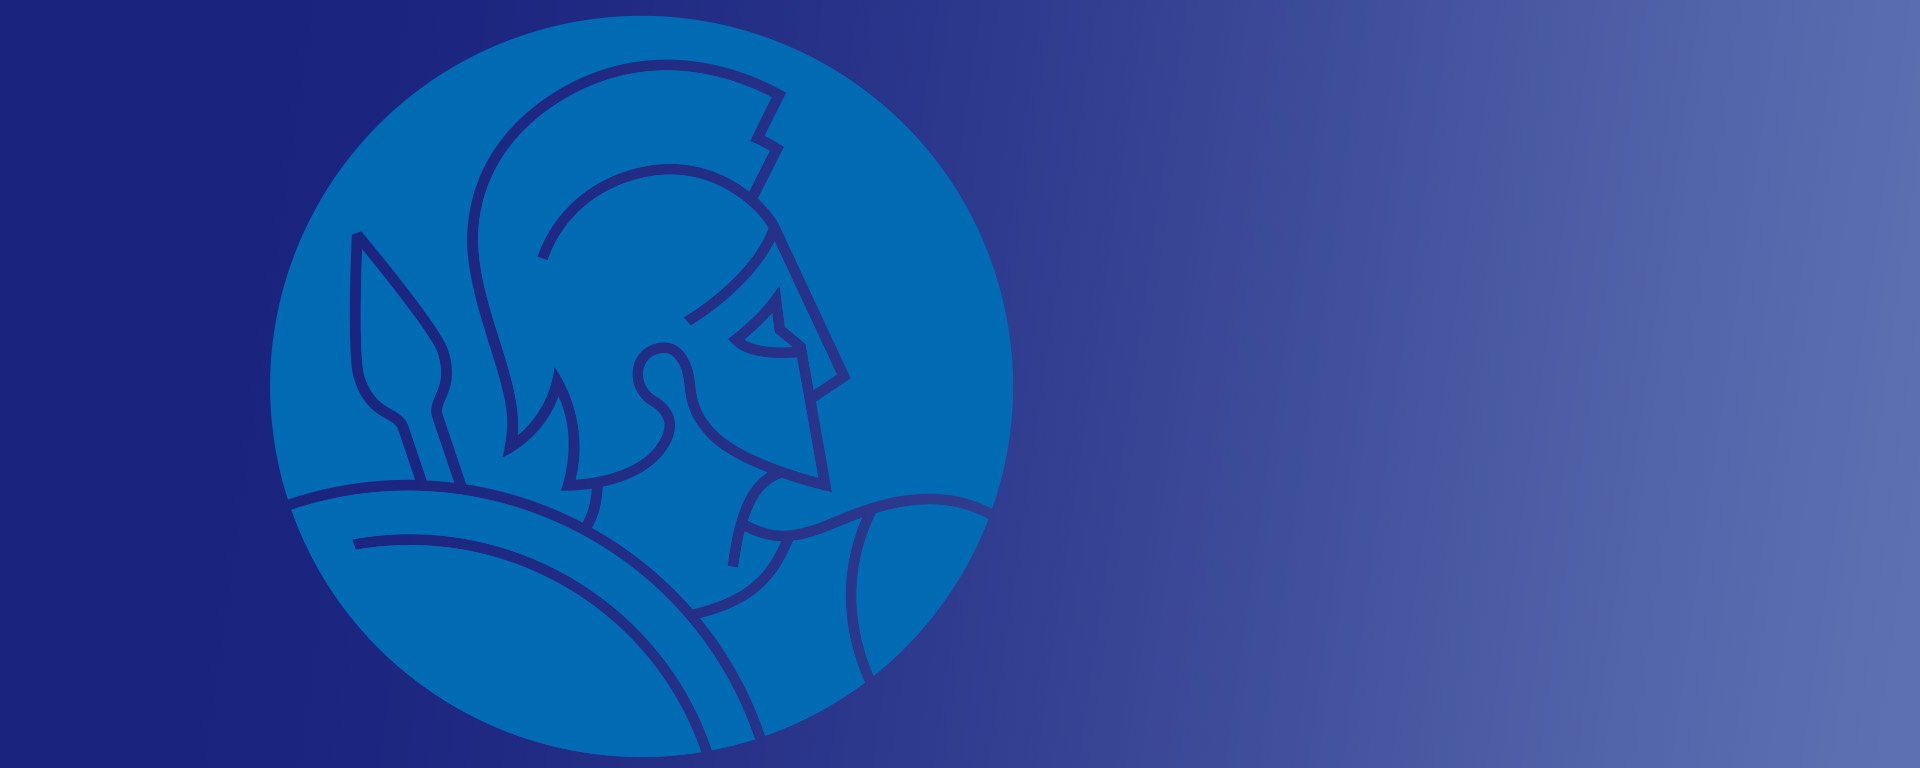 Strategas logo on a blue background